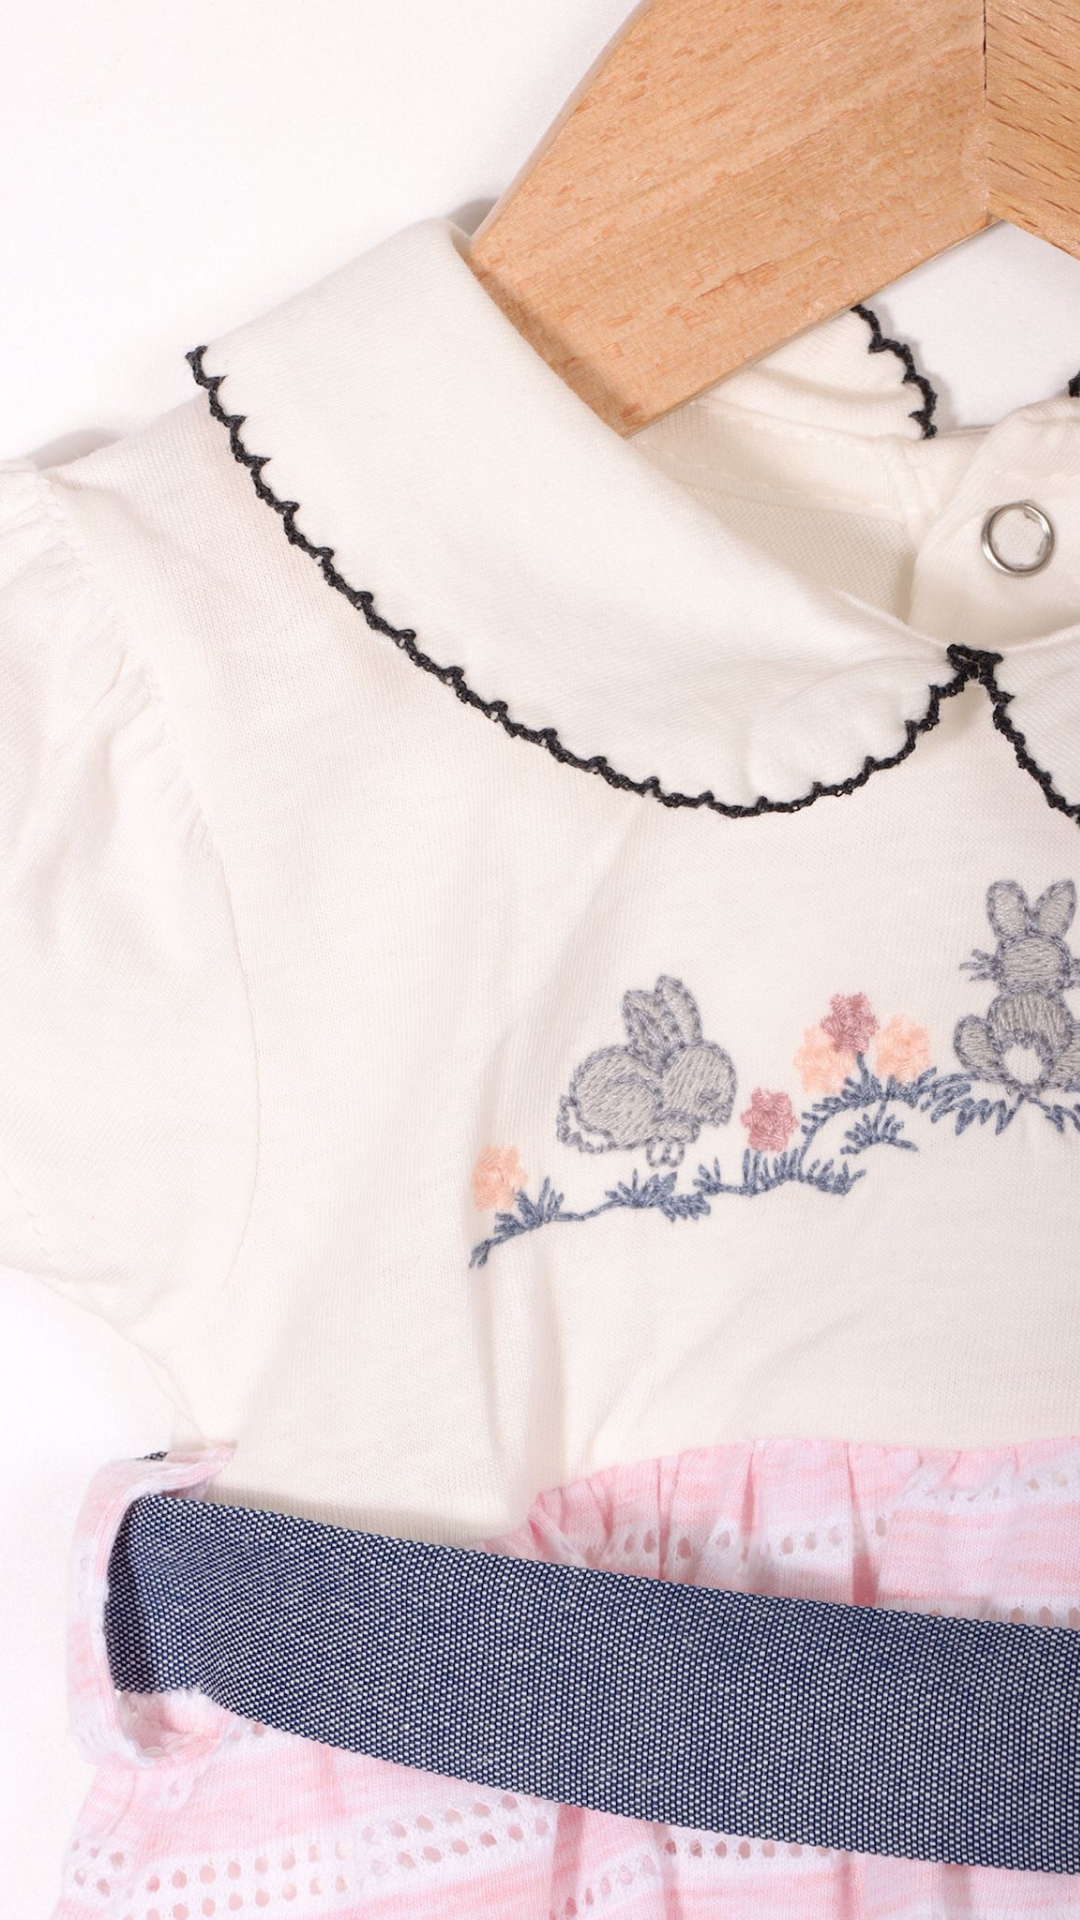 Jollyjoy Tavşan Nakışlı Kız Bebek Bady Elbise Pembe